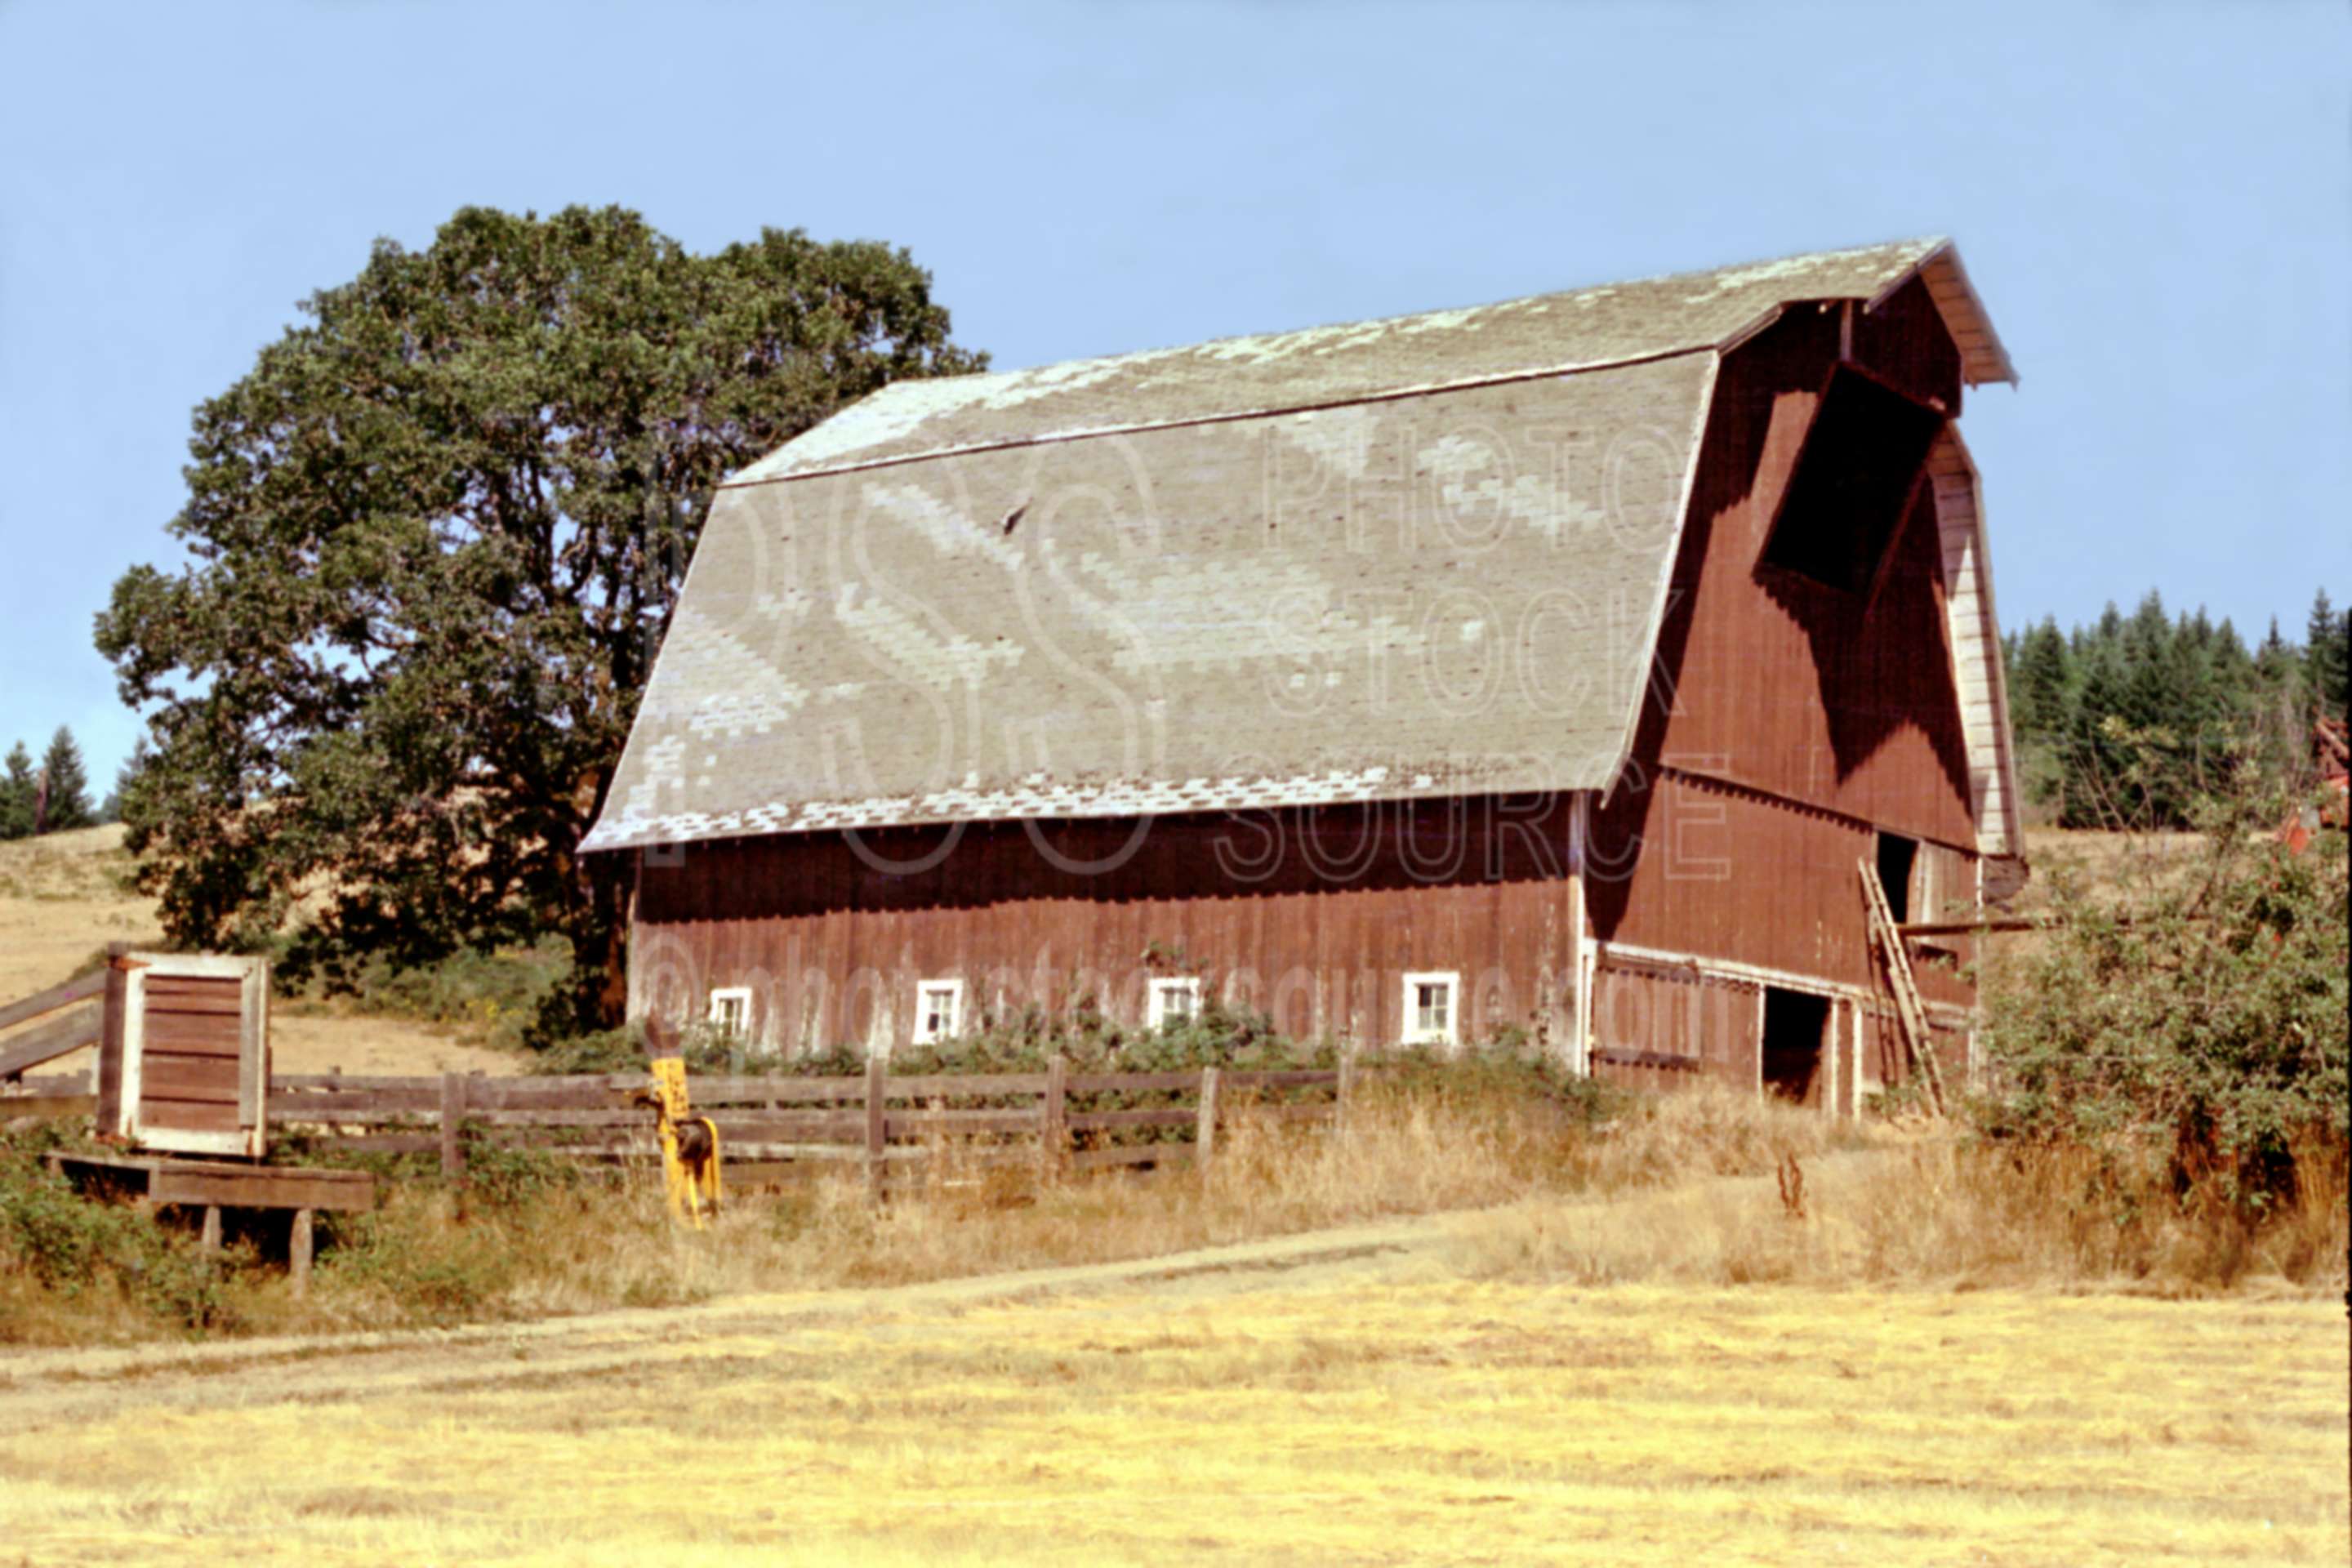 Century Farm,barn,oaks,tree,usas,barns